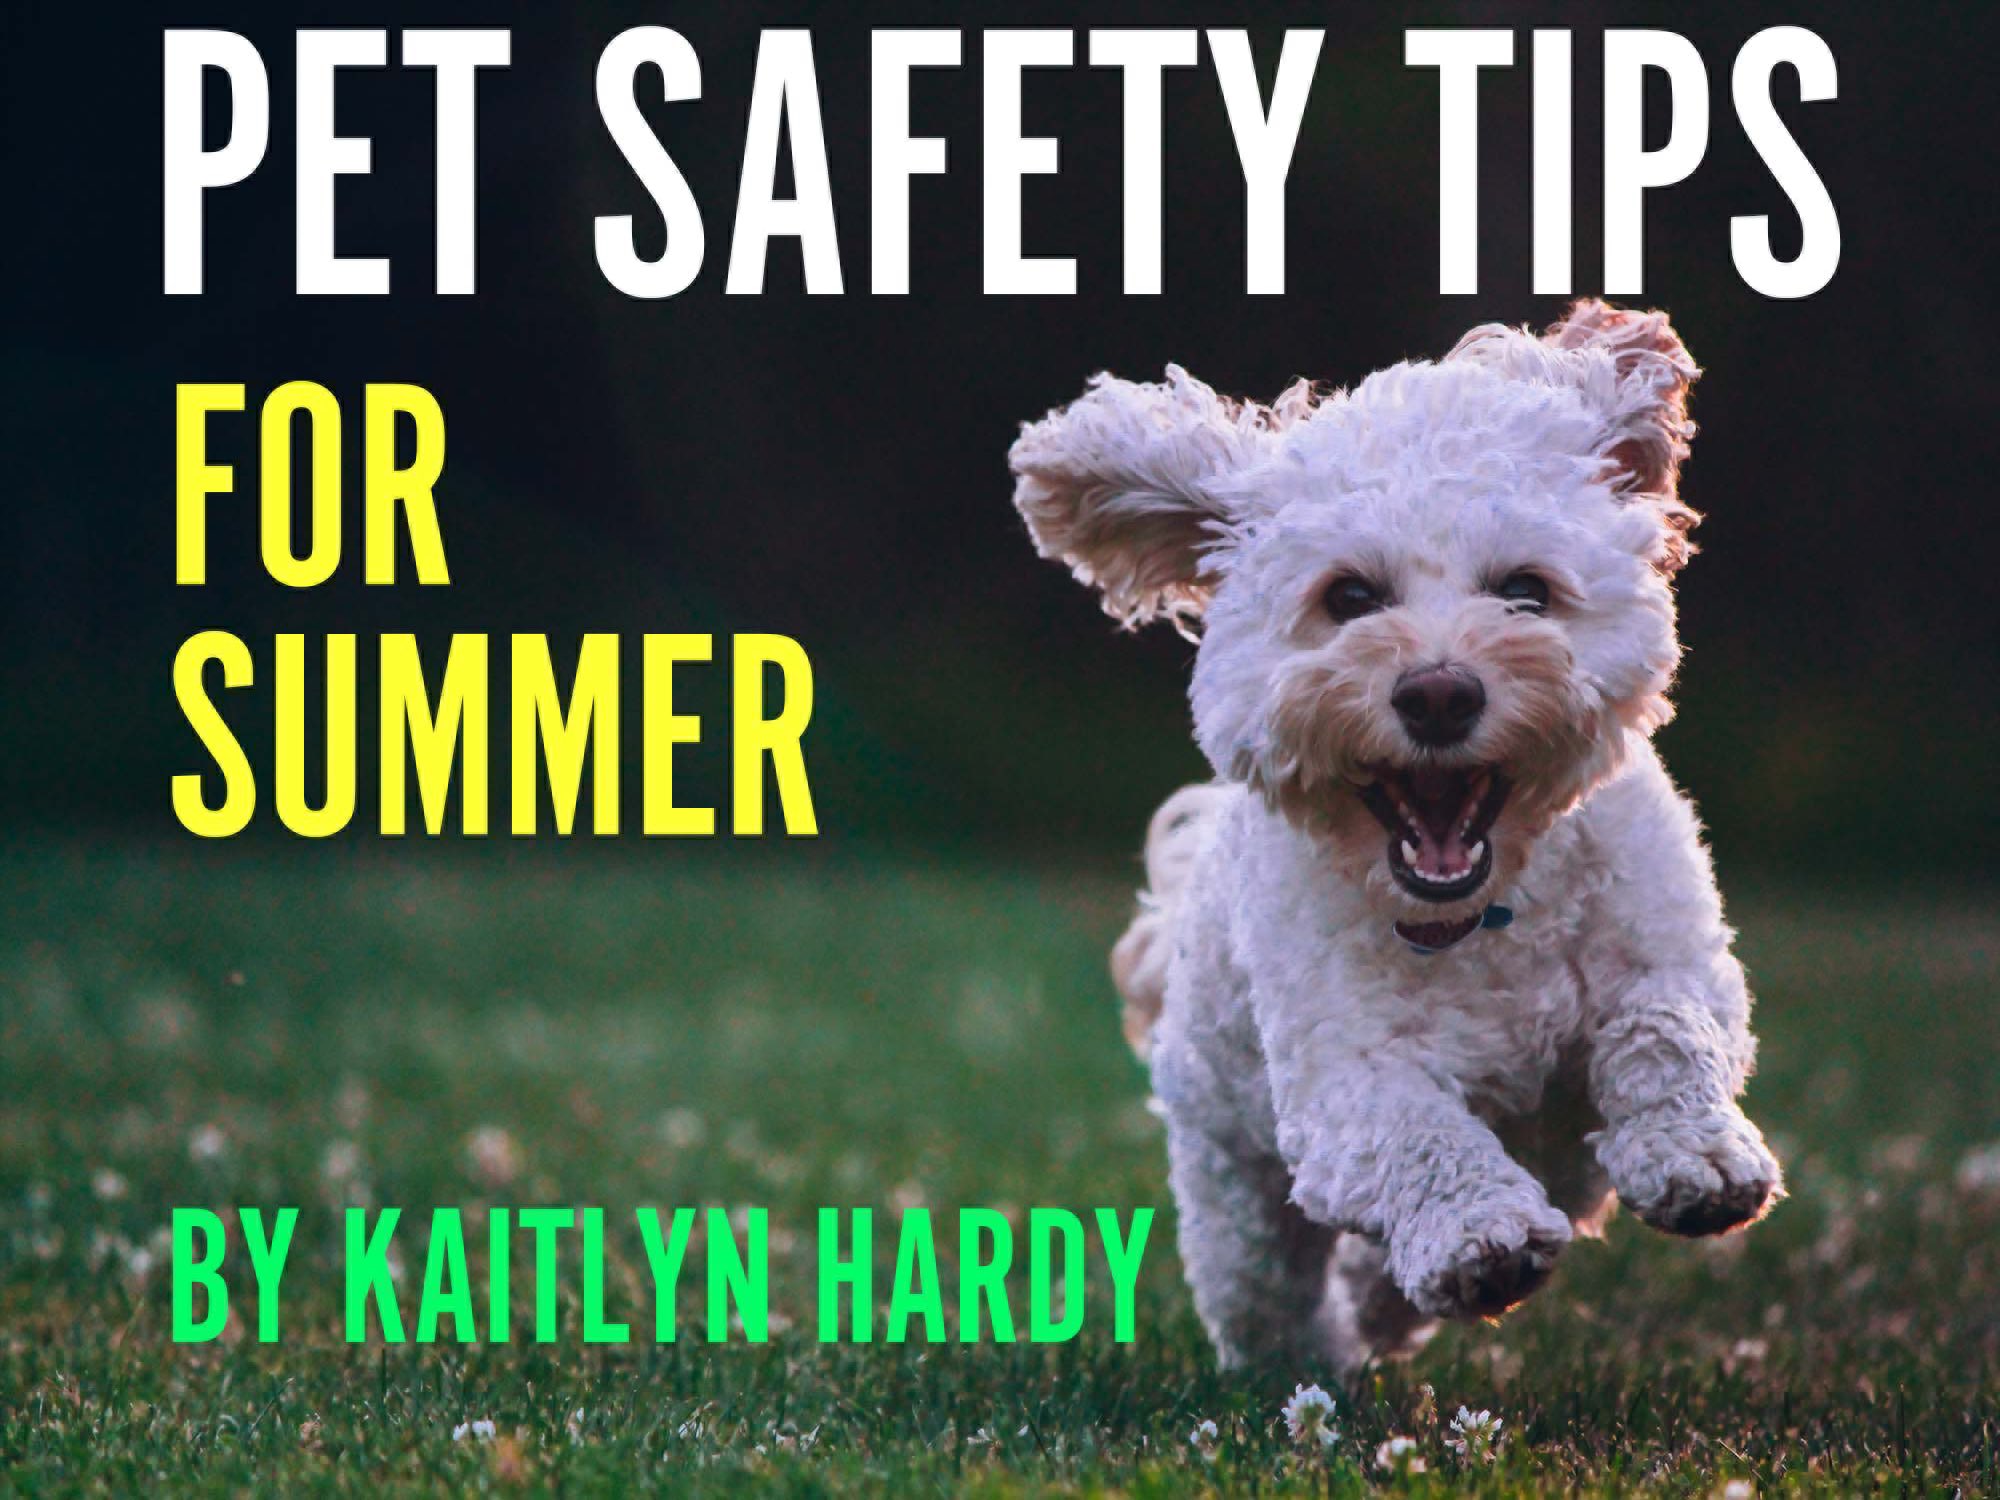 Summer Pet Safety Tips